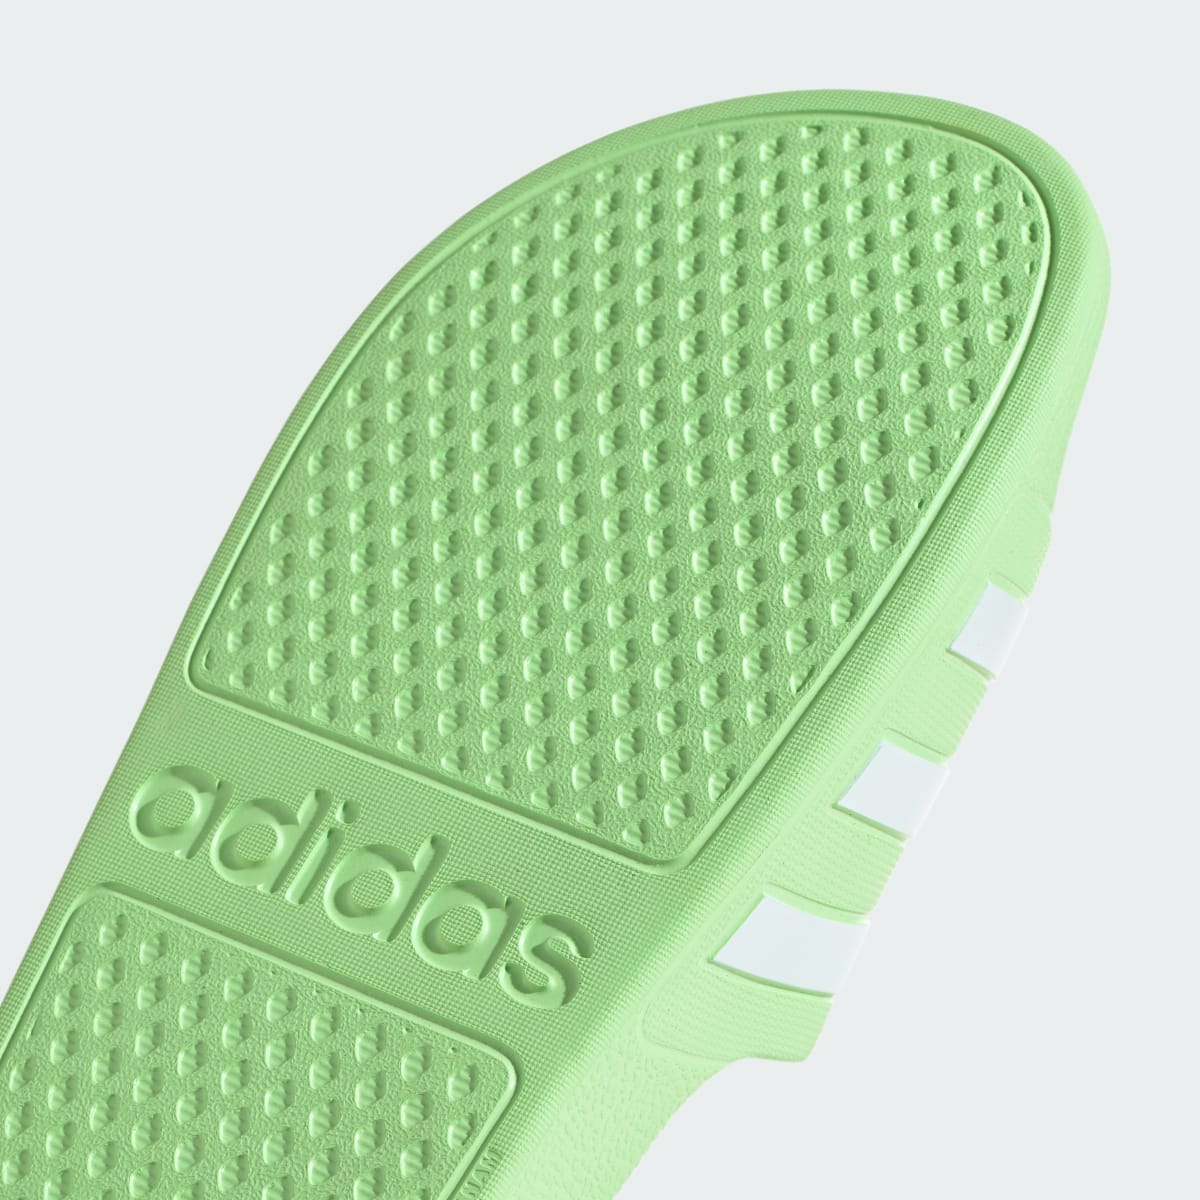 Adidas Aqua adilette. 10